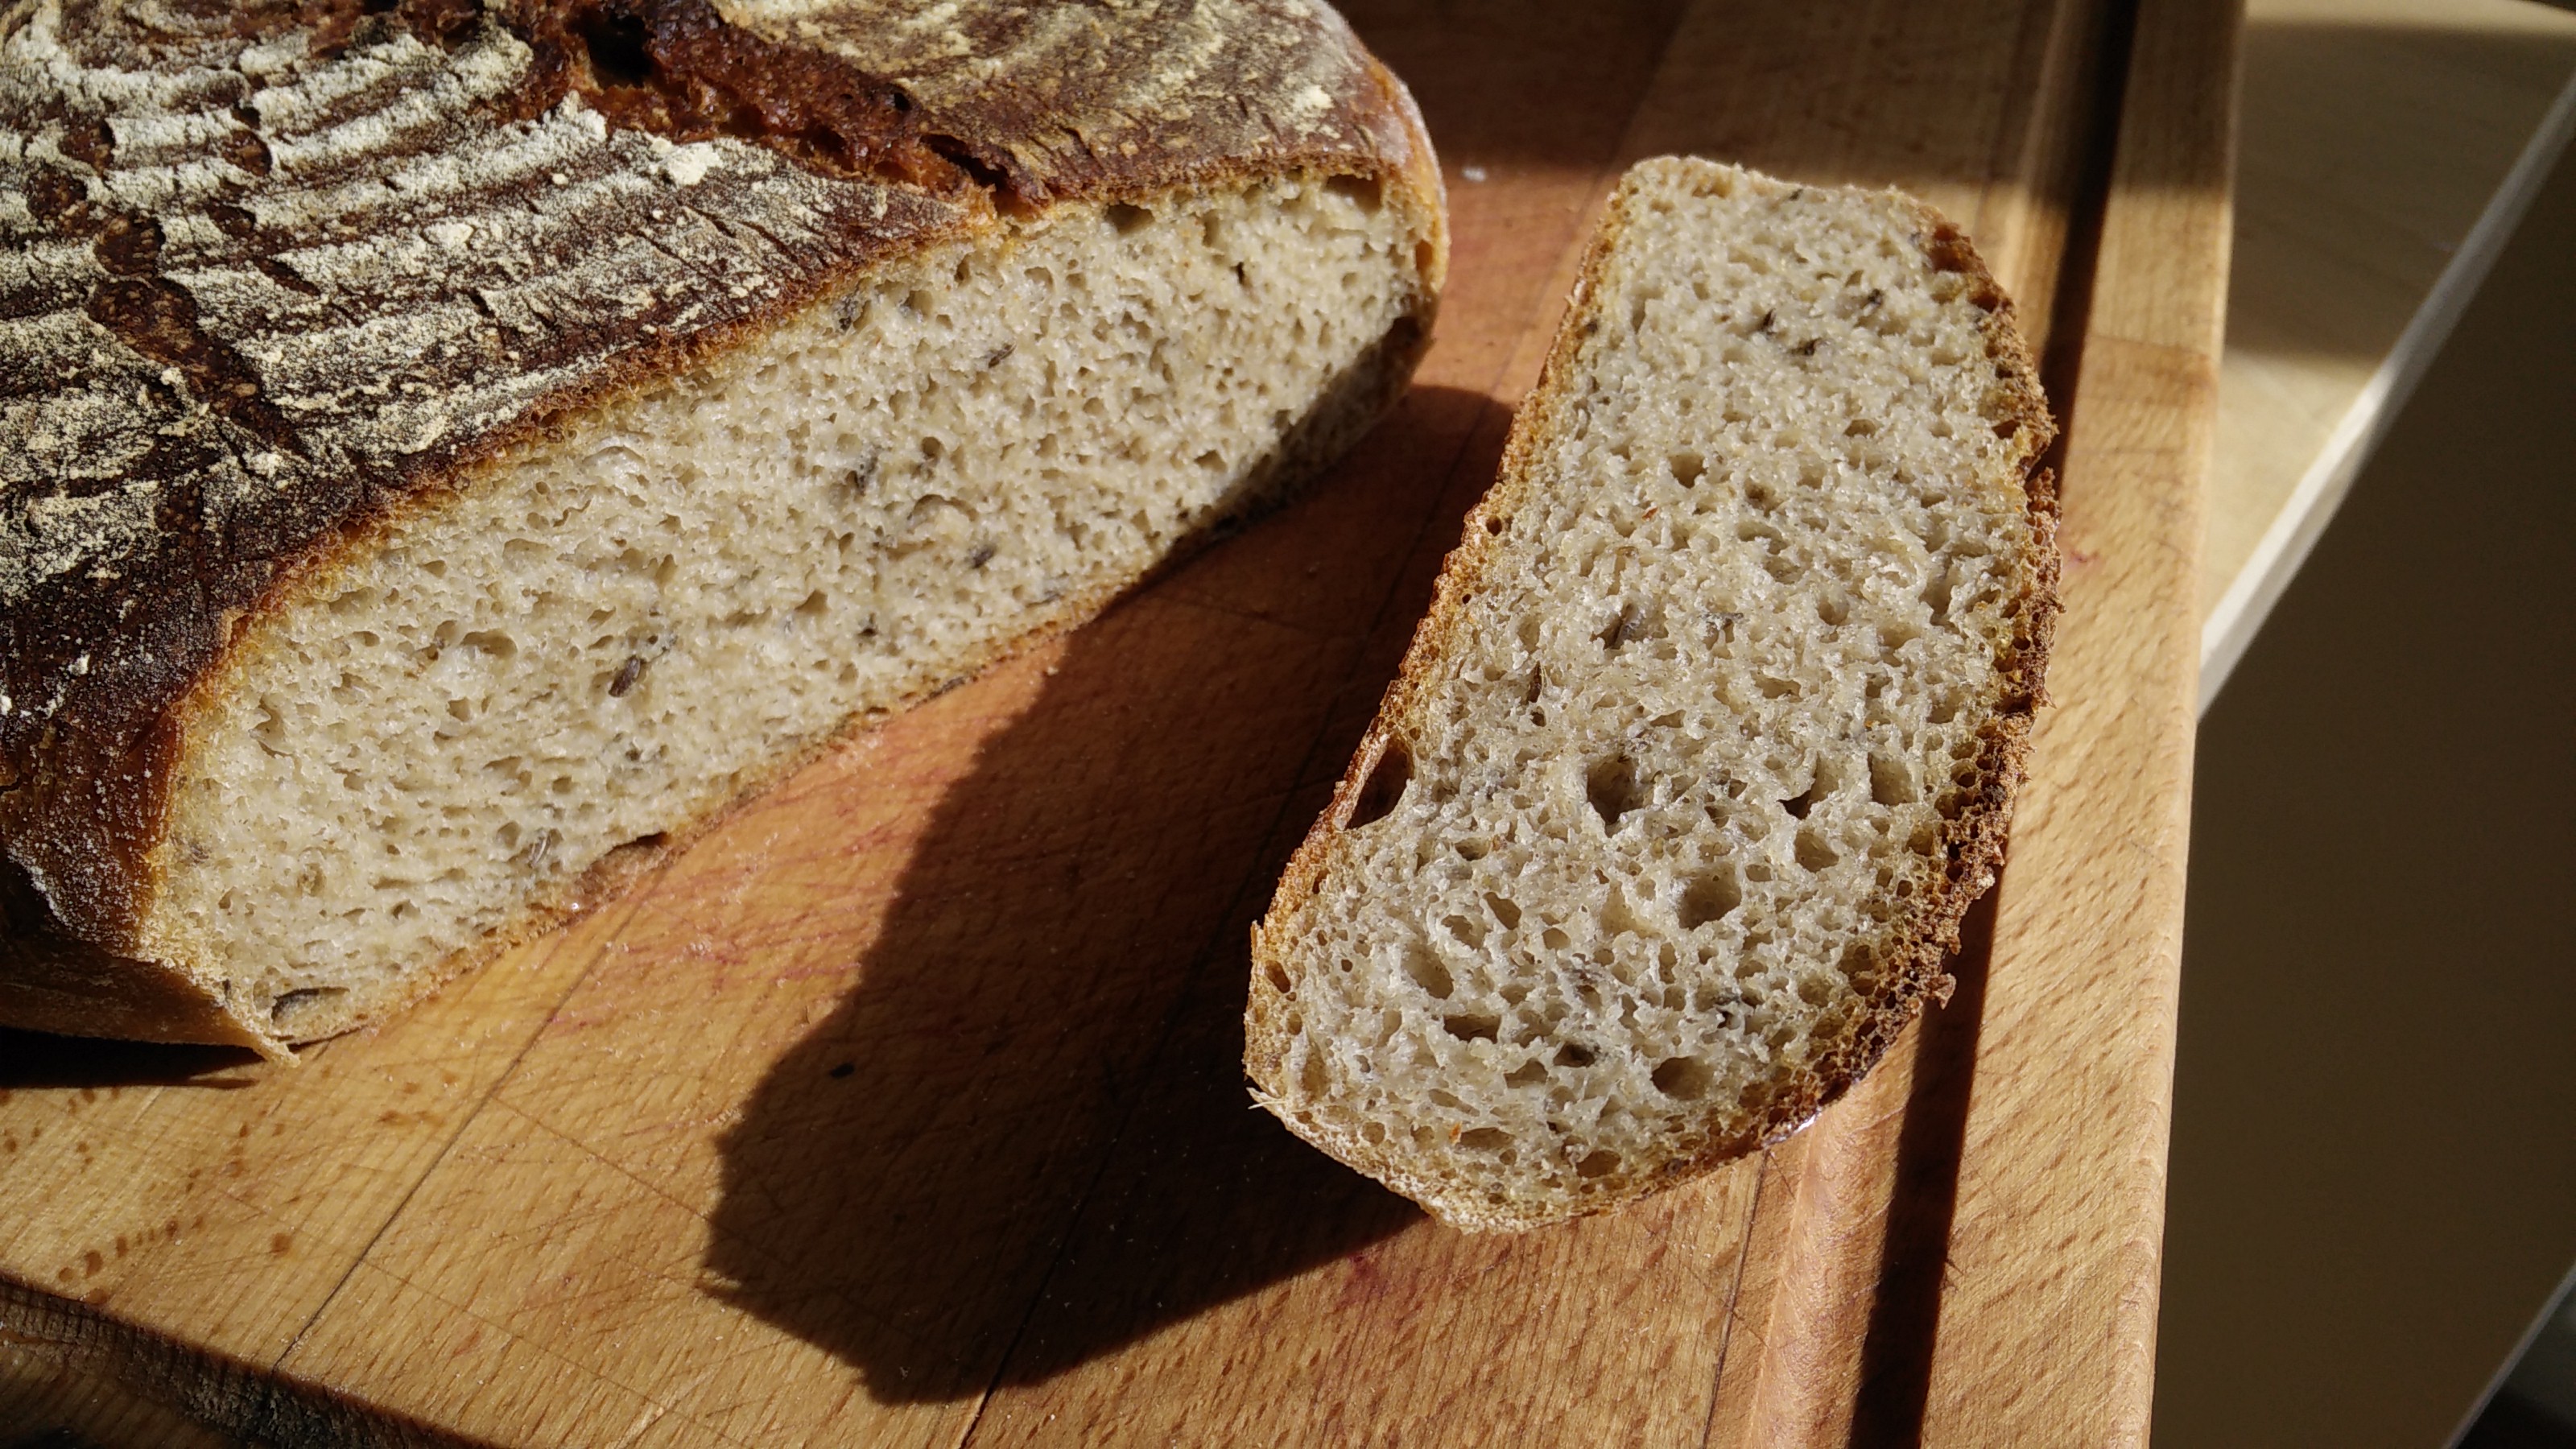 Bread photo data/2020-09-19/2020-09-19%2015.04.07.jpg